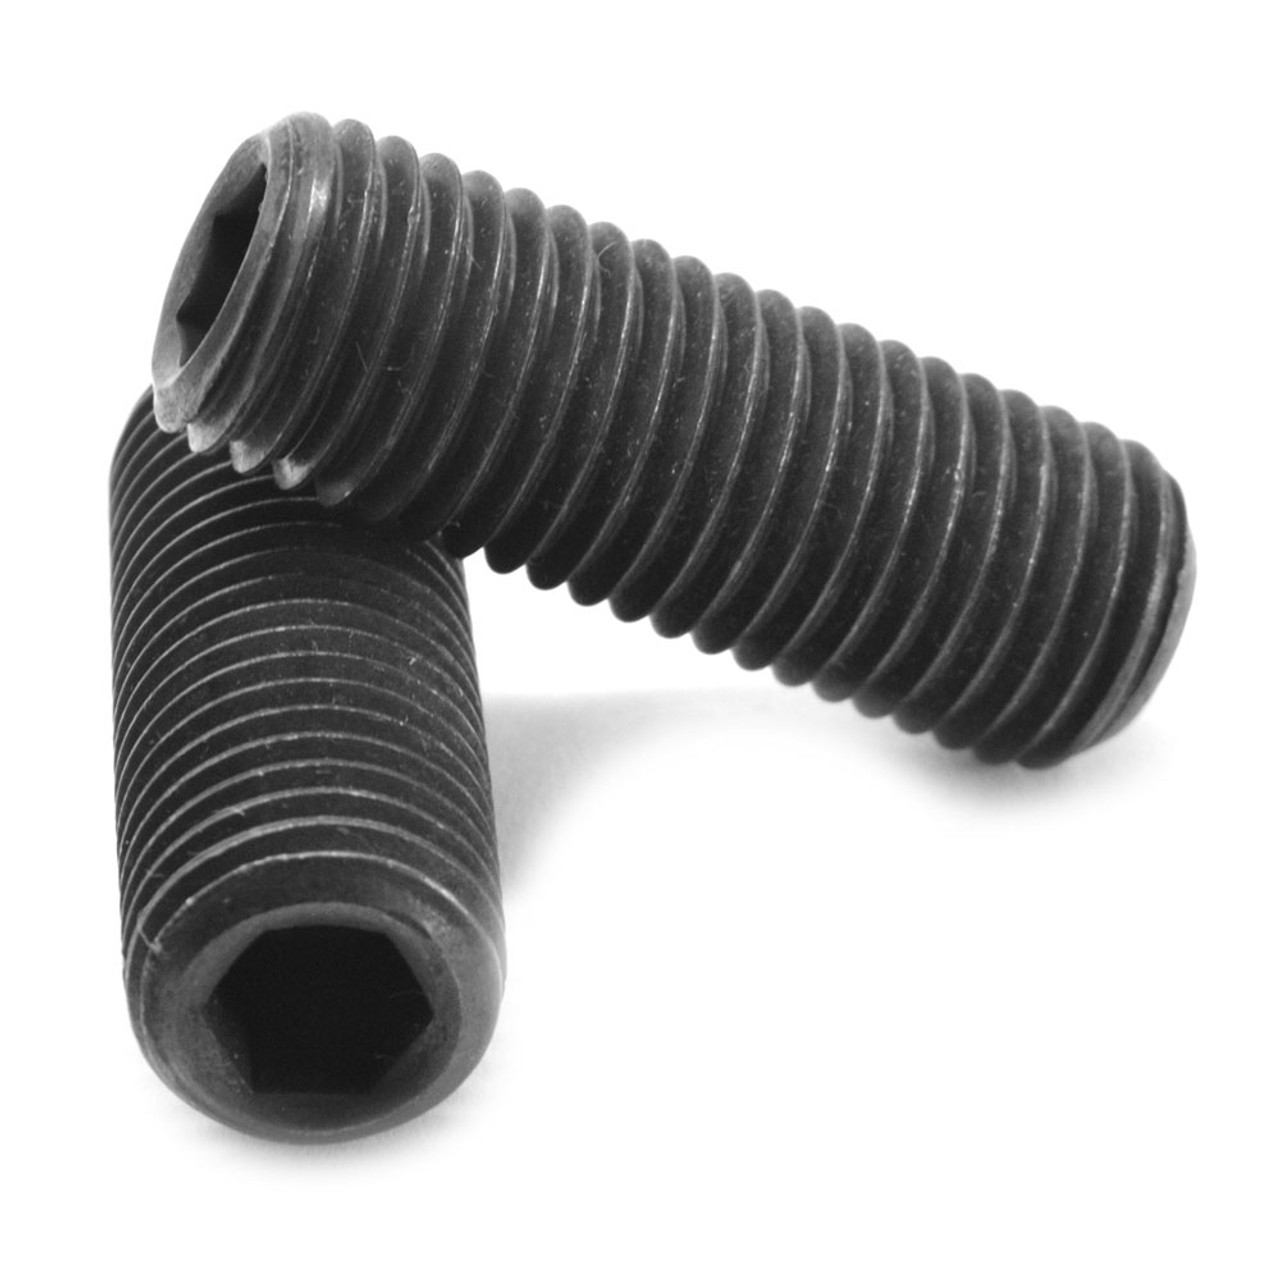 M20 x 2.50 x 45 MM Coarse Thread ISO 4029 / DIN 916 Class 45H Socket Set Screw Cup Point Alloy Steel Black Oxide